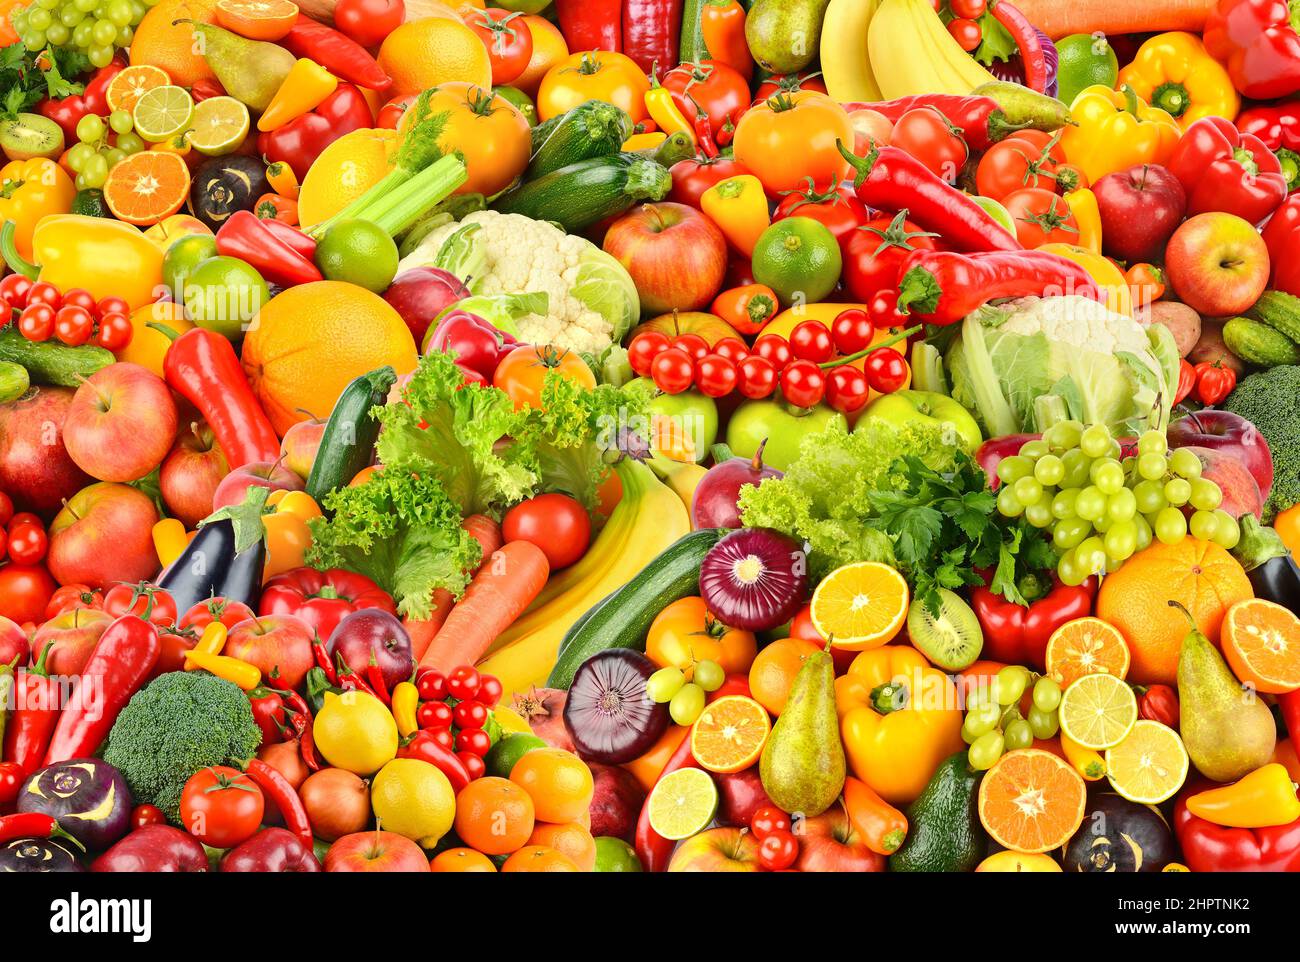 https://c8.alamy.com/comp/2HPTNK2/large-fruit-pattern-of-fresh-and-healthy-colorful-vegetables-and-fruits-rectangular-background-2HPTNK2.jpg